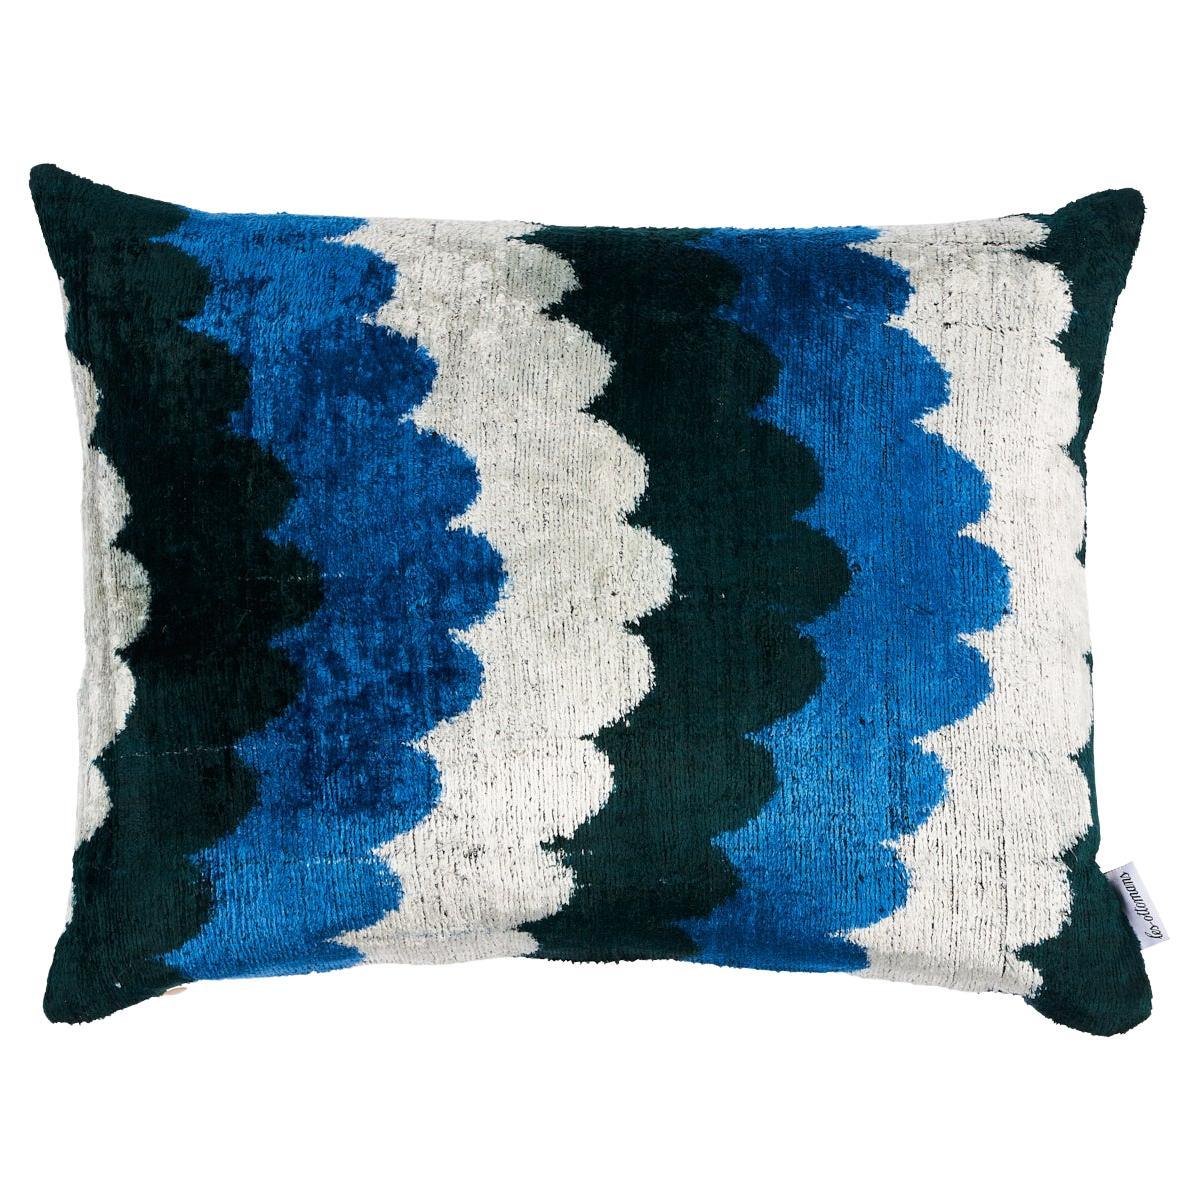 Schumacher Samsun Silk Velvet in Blue & Green 20 x 16" Pillow For Sale